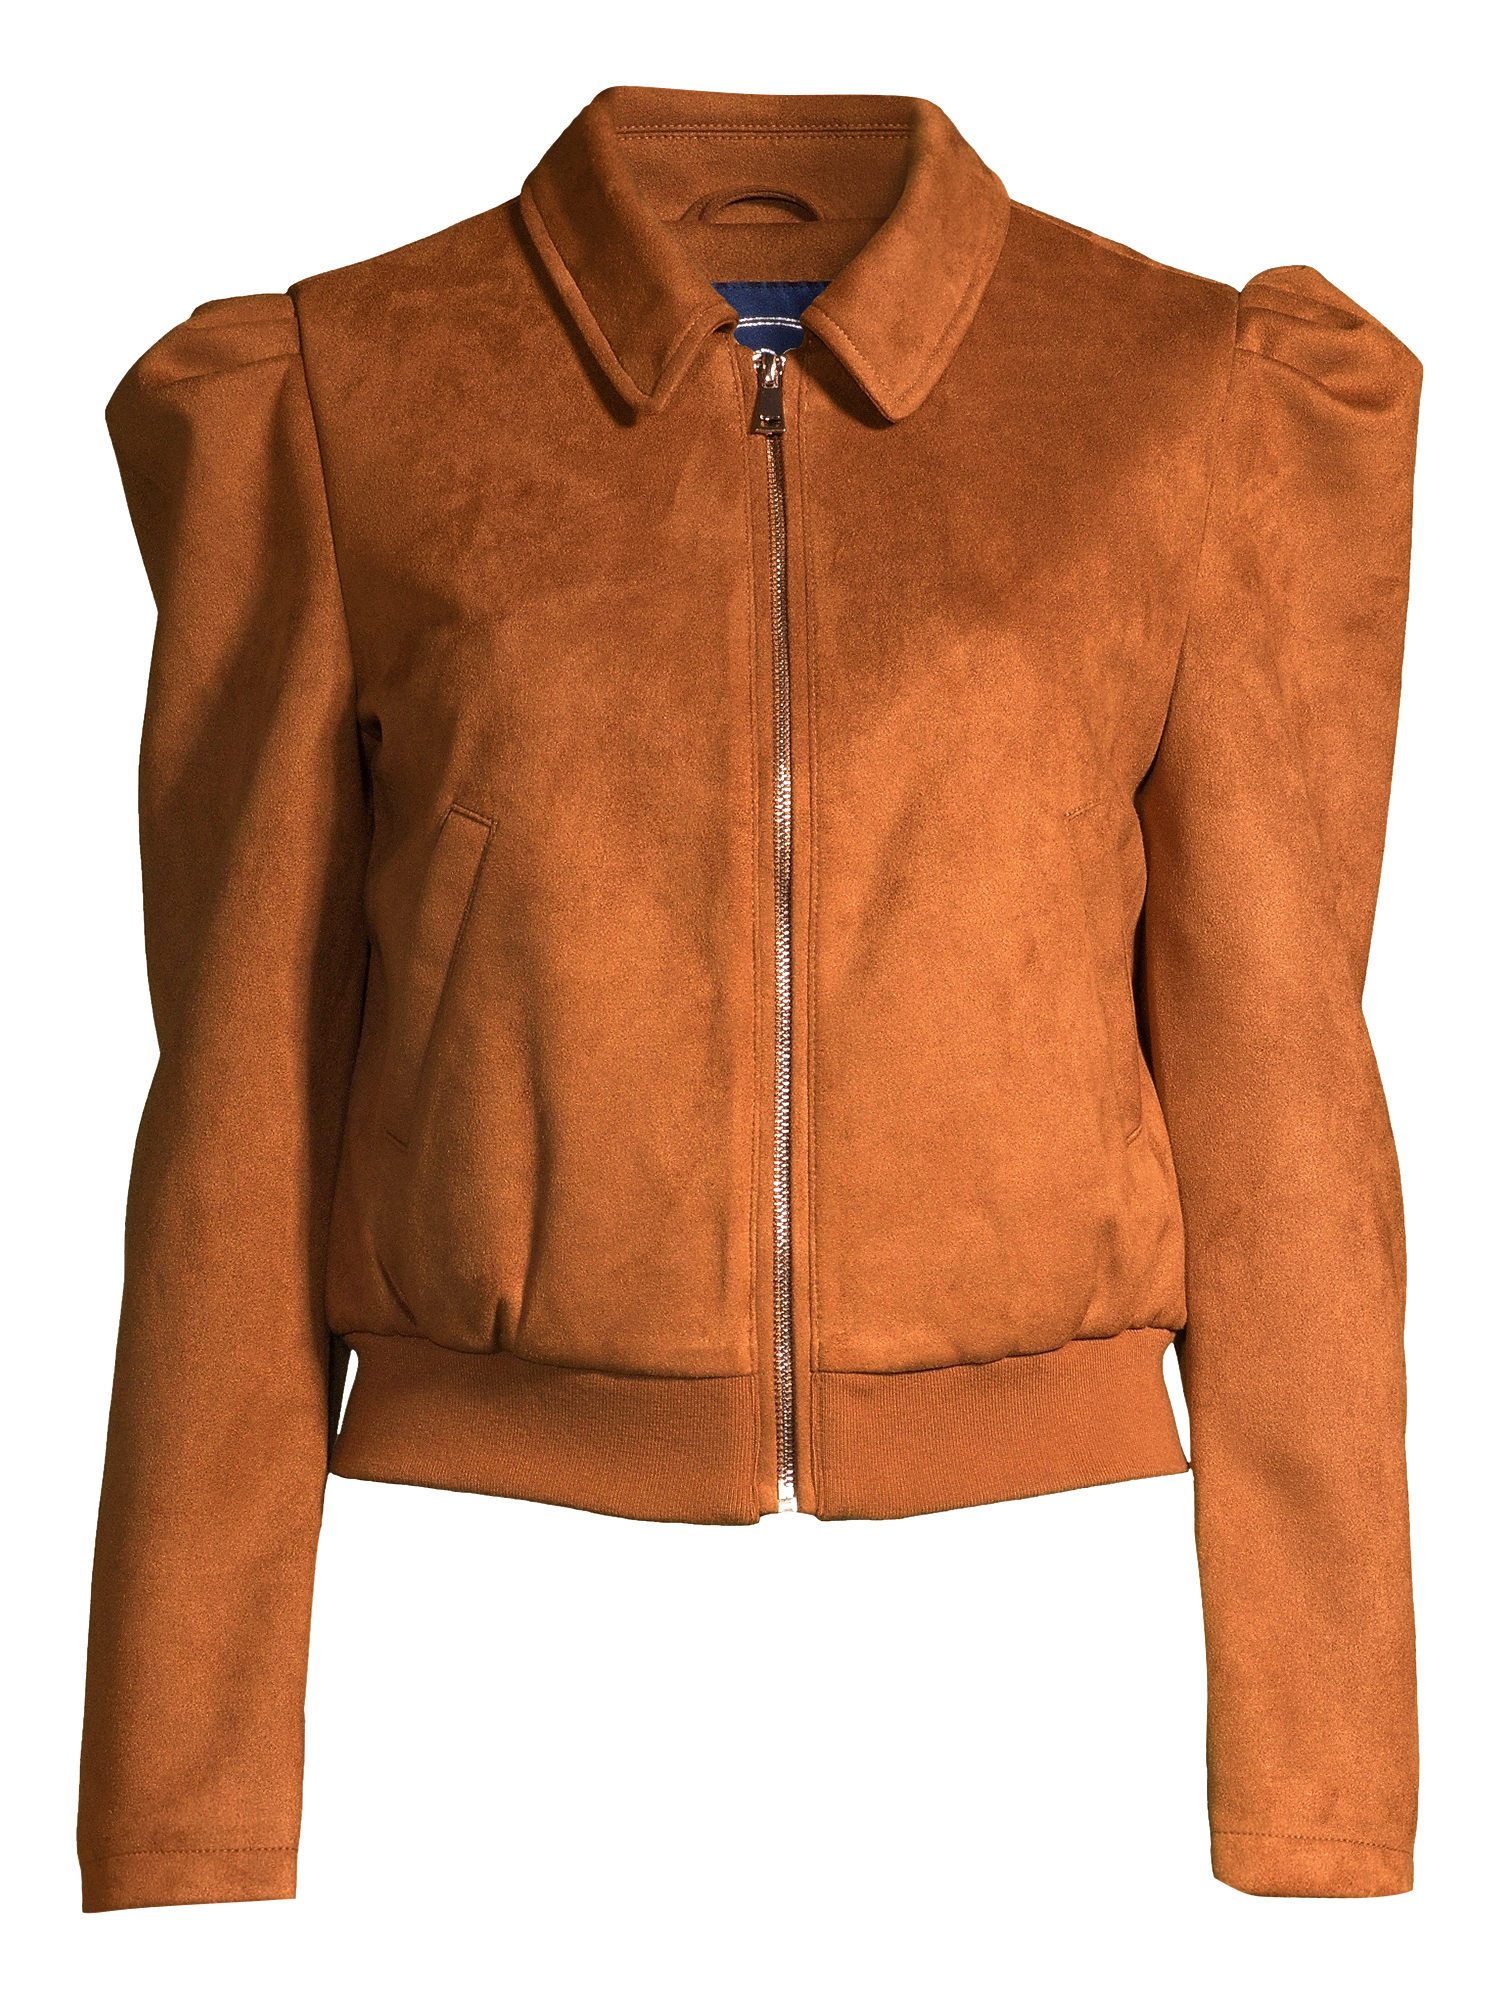 Scoop Long Sleeve Modern Fit Single-Breasted Jacket (Women's) 1 Pack - image 5 of 6